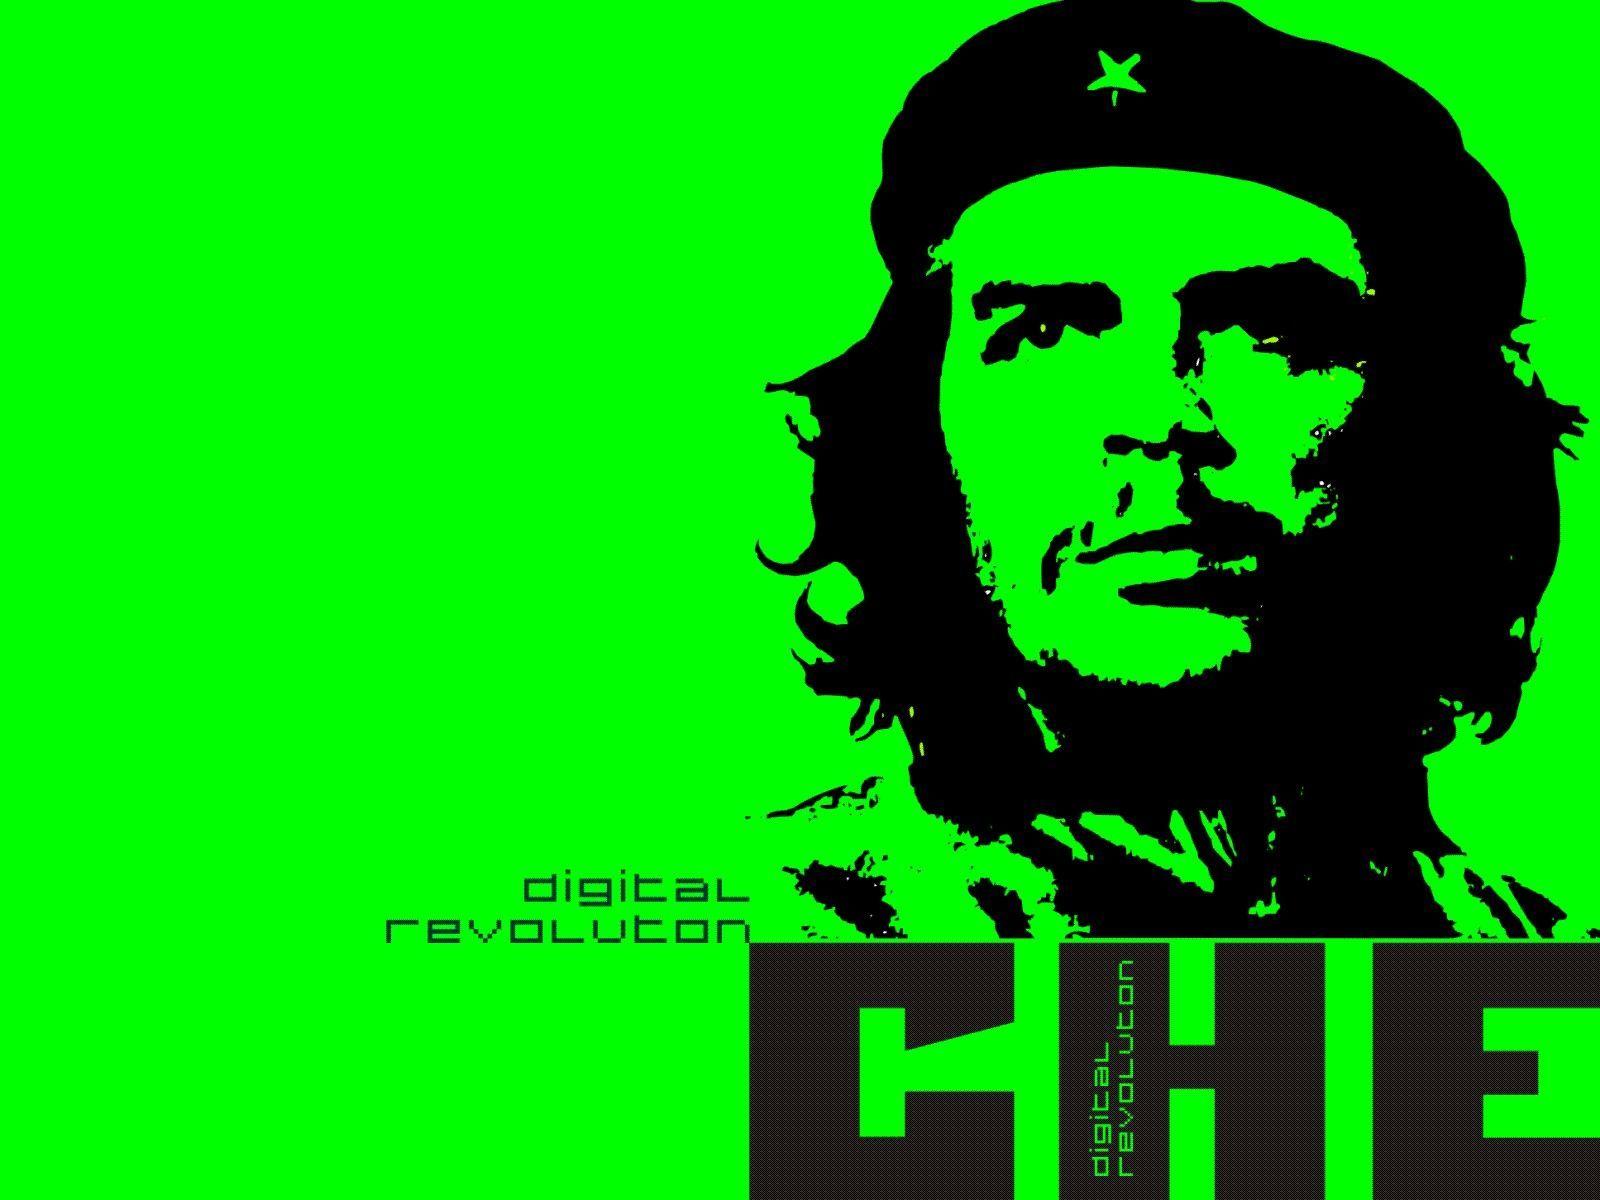 PC wallpaper, Digital revolution - Che